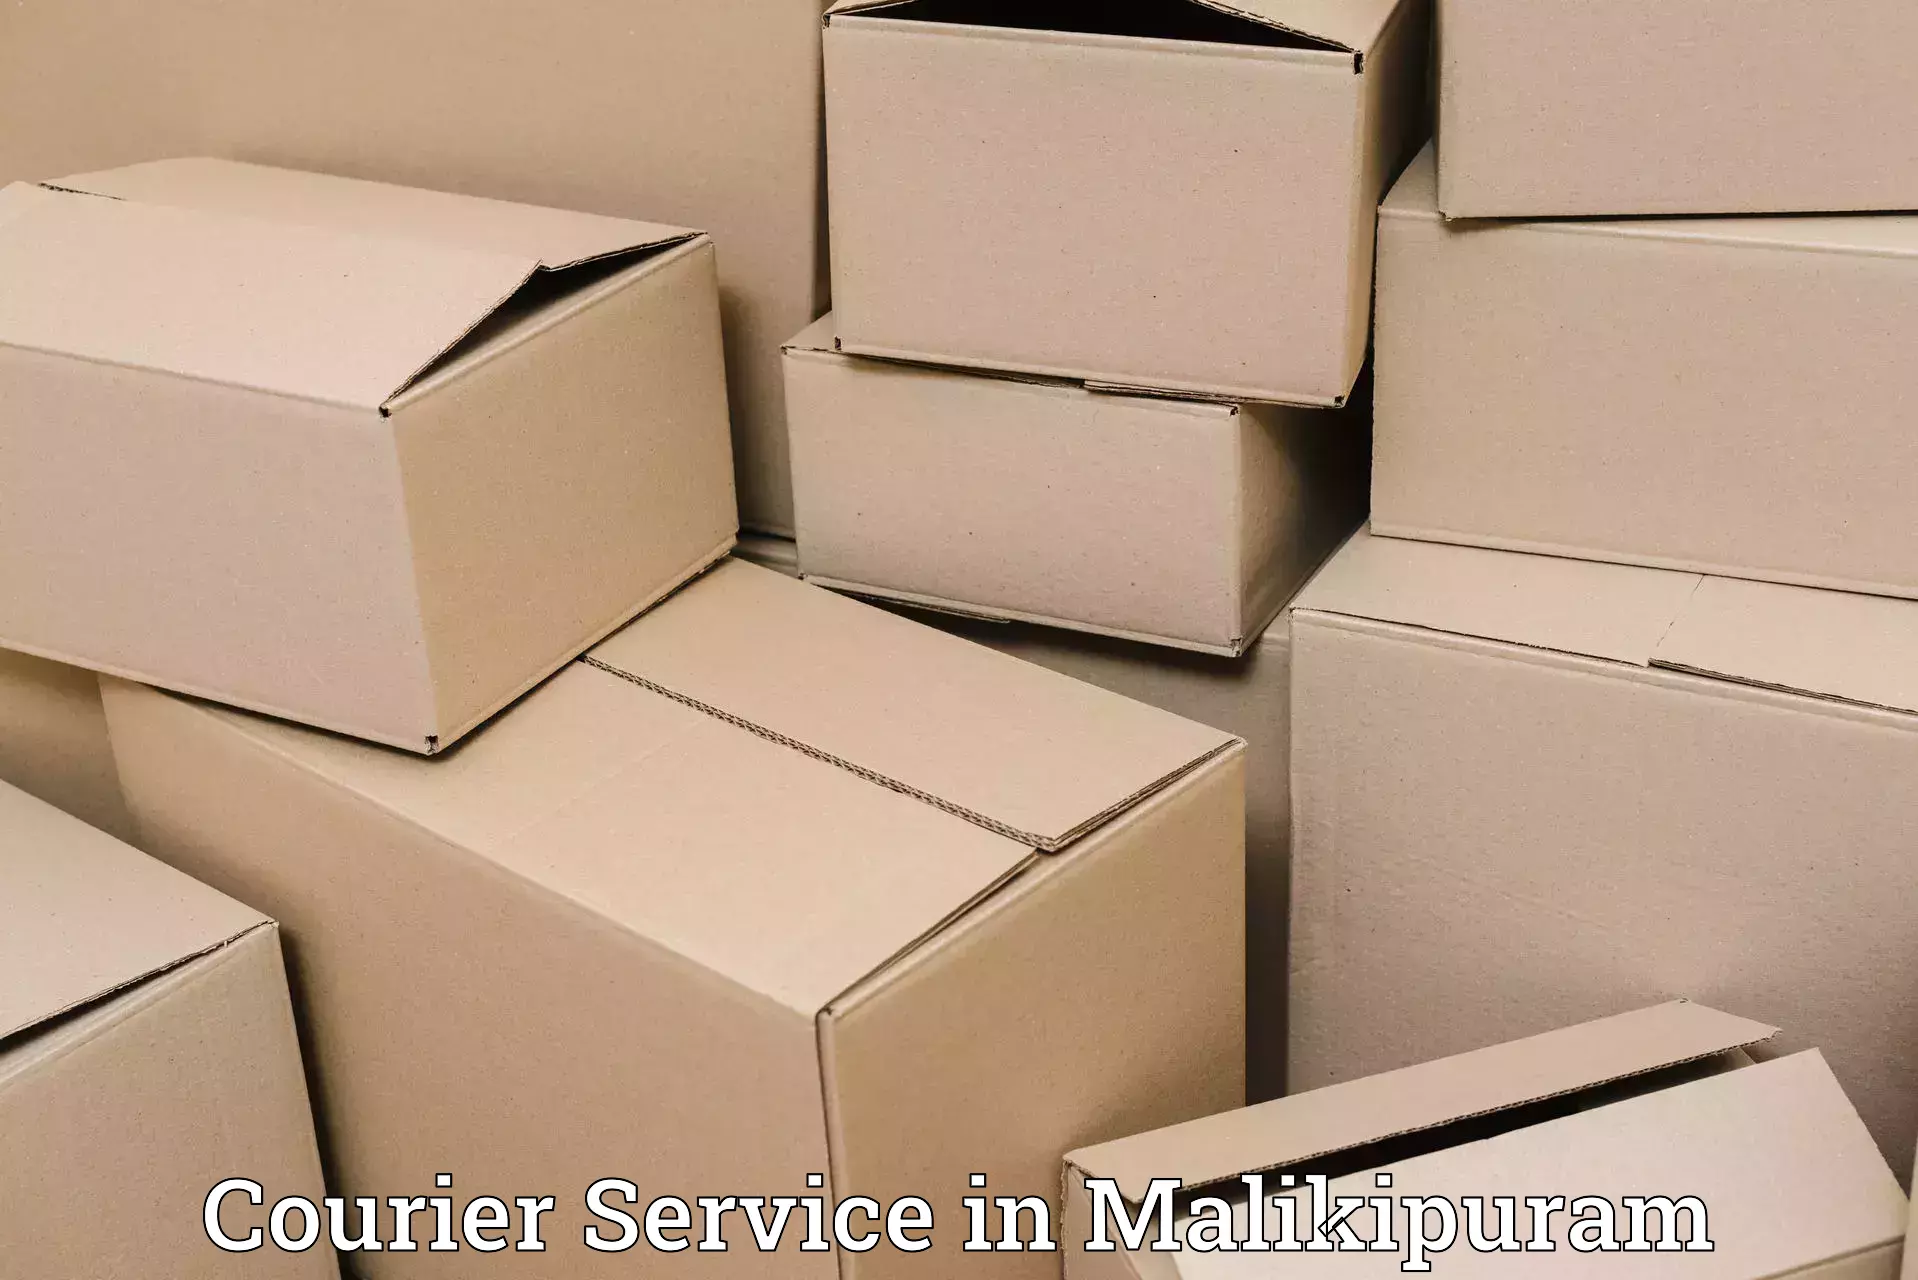 Delivery service partnership in Malikipuram